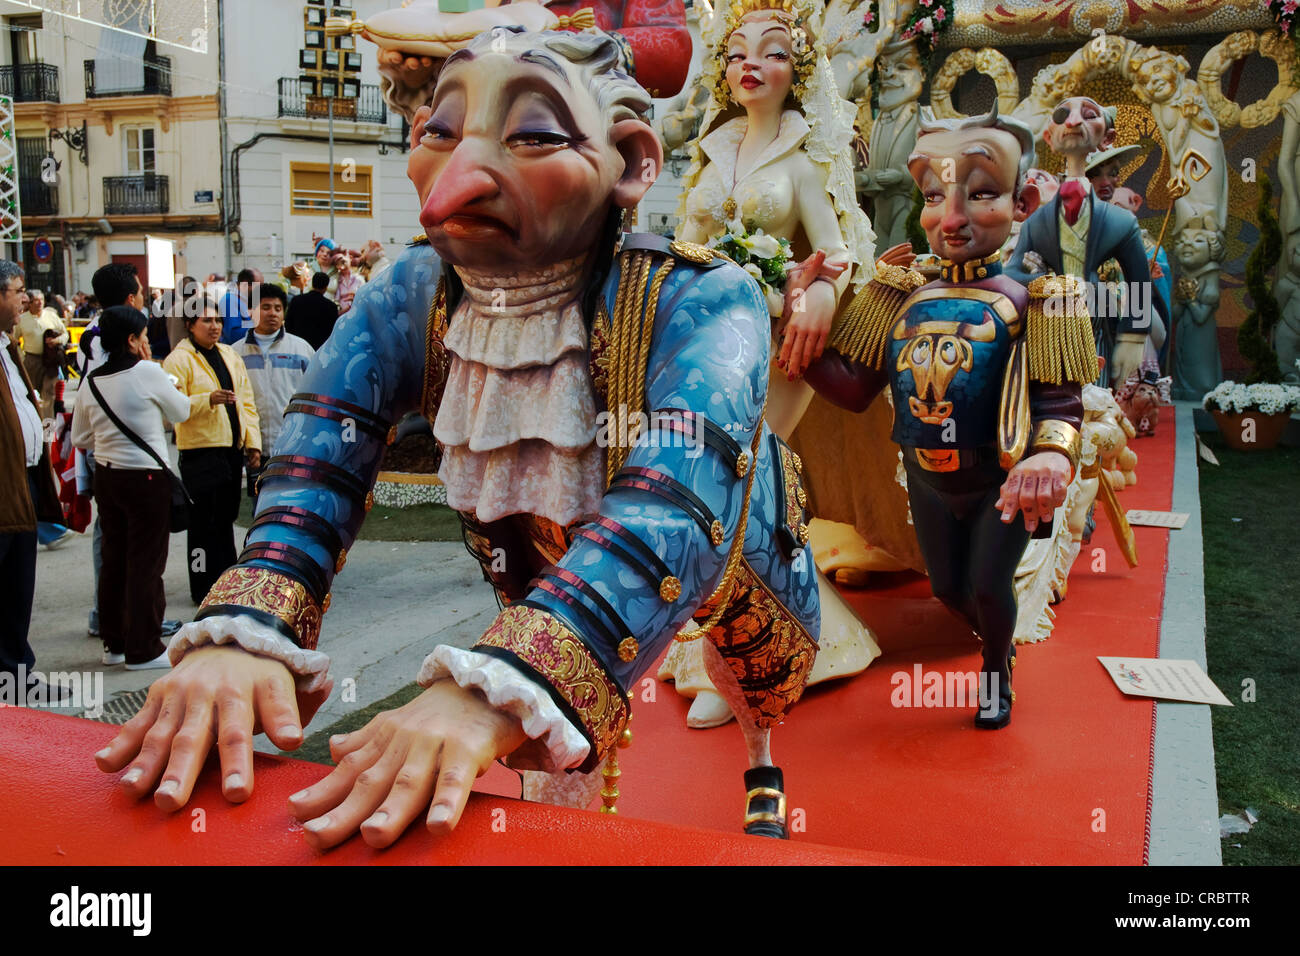 Als frau karneval mann verkleidet todayshow.luxorlinens.com :